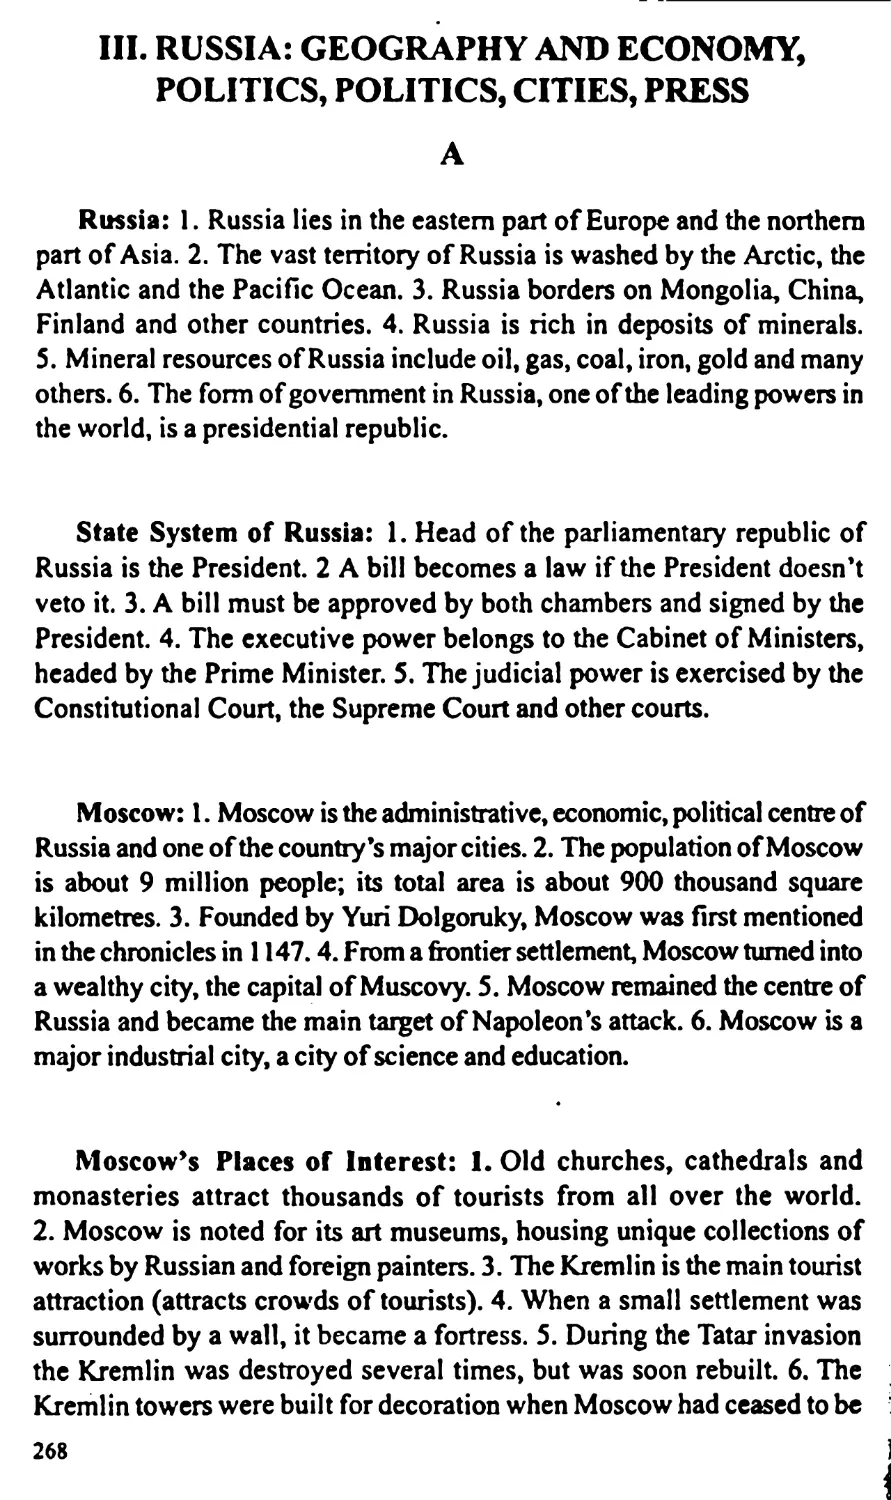 III.	RUSSIA: GEOGRAPHY AND ECONOMY, POLITICS, POLITICS, CITIES, PRESS